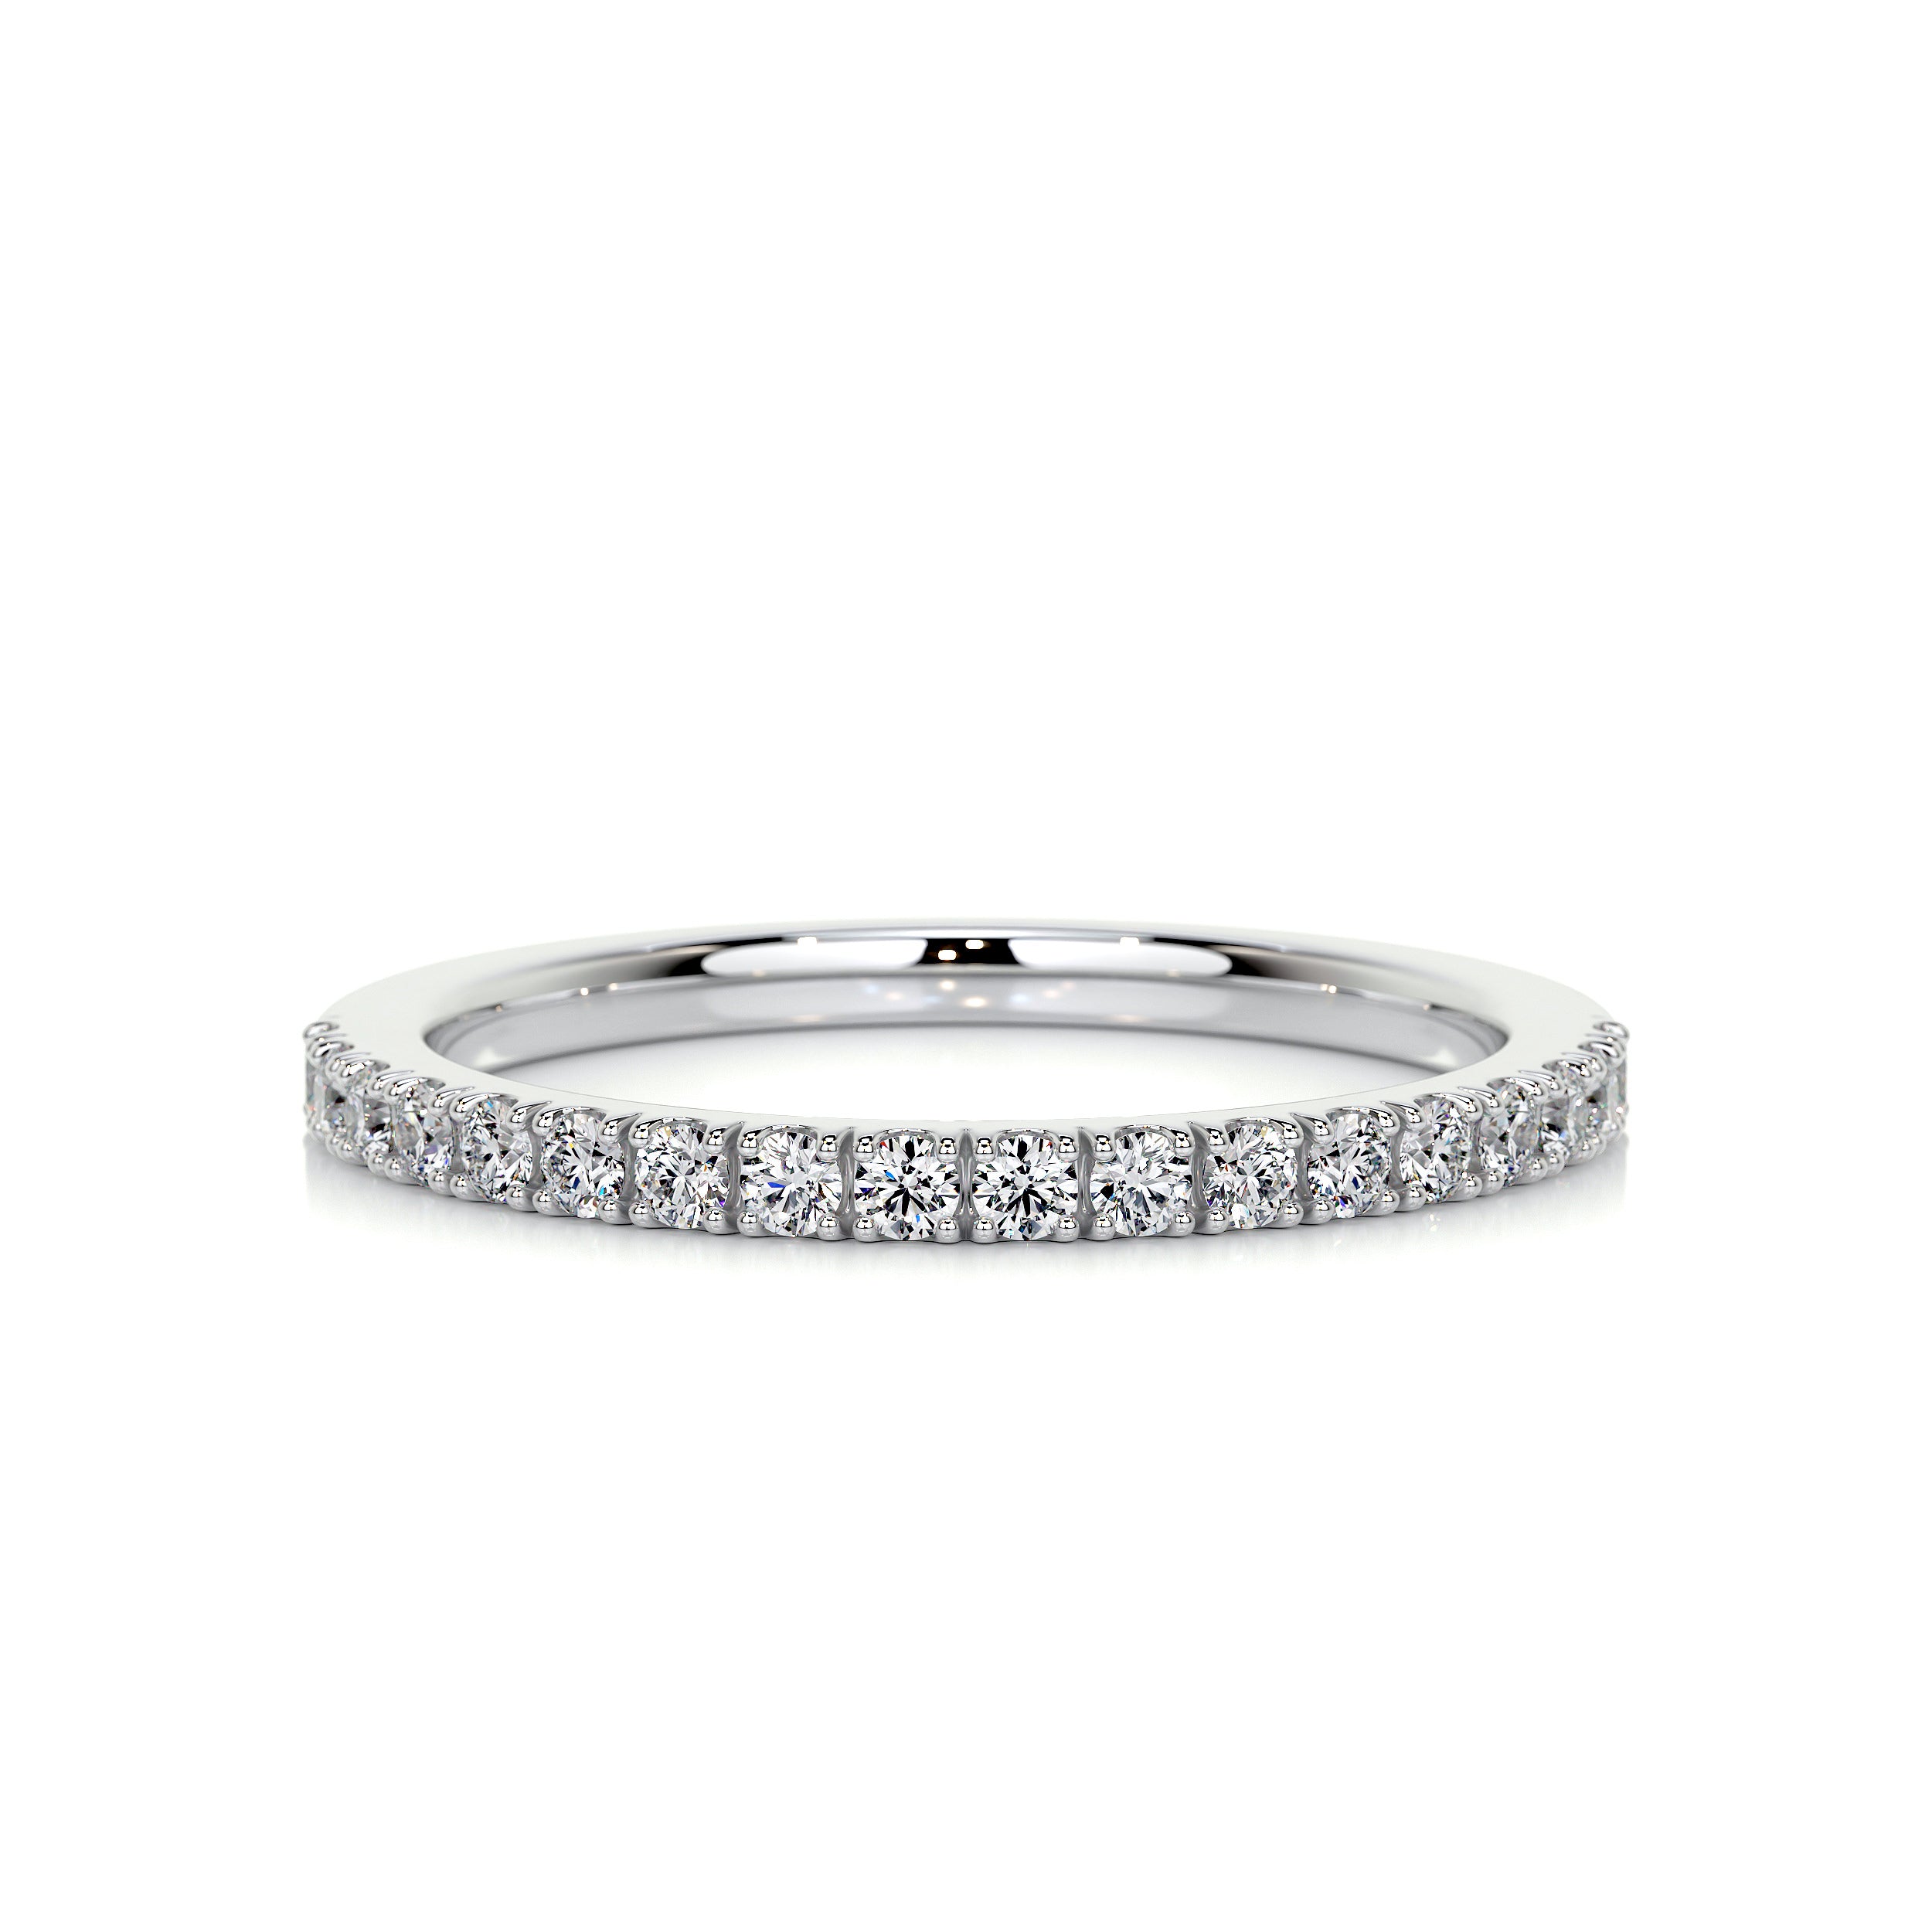 Stephanie Diamond Wedding Ring   (0.3 Carat) - Platinum